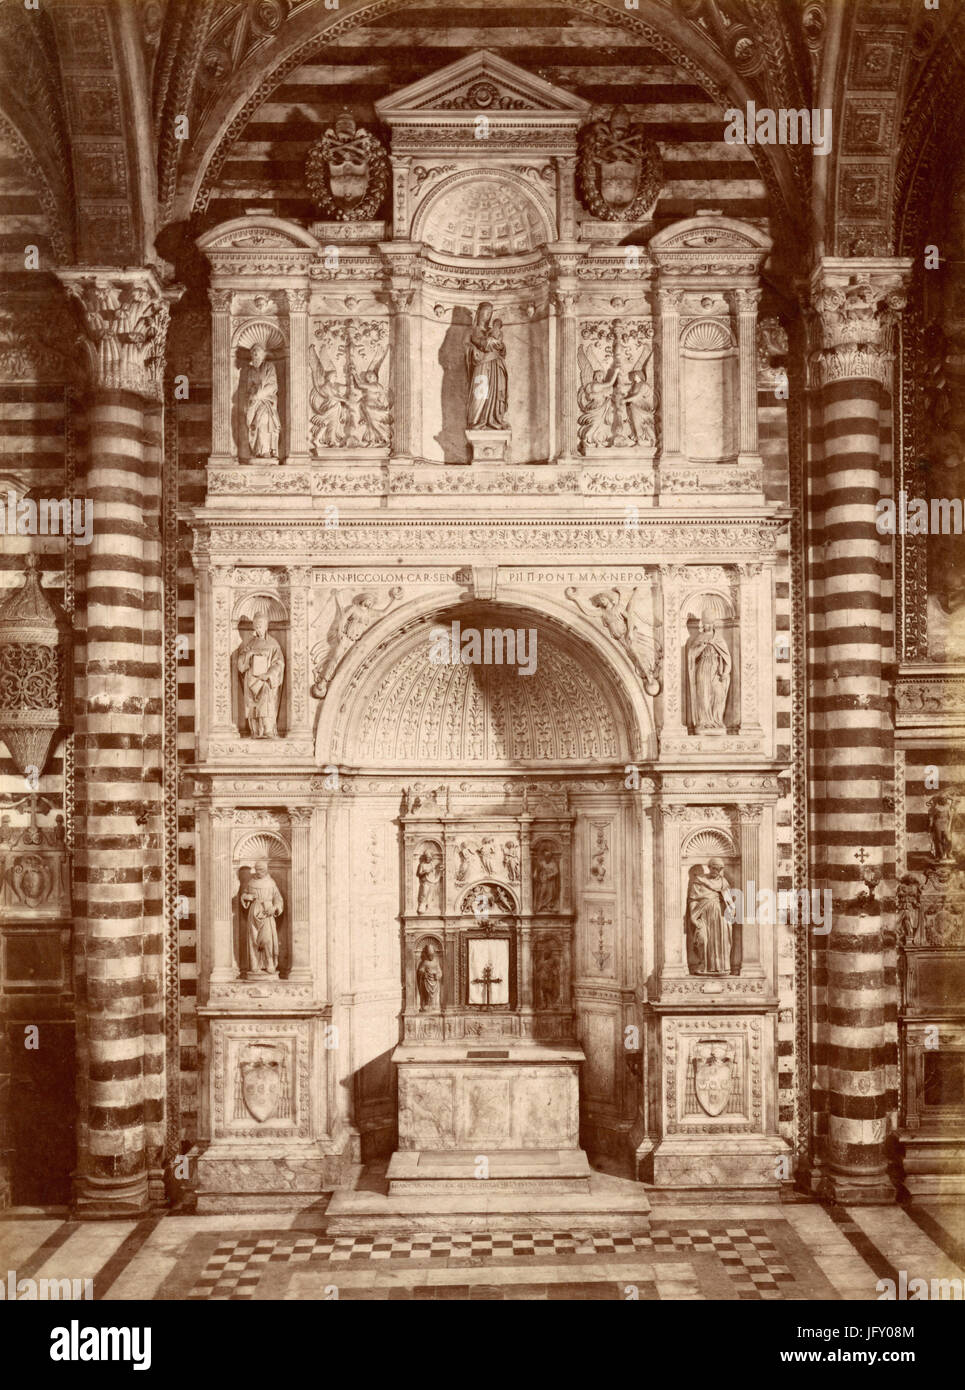 Piccolomini-Altar, Dom von Siena Marmor von Bregno und Michelangelo, Italien Stockfoto